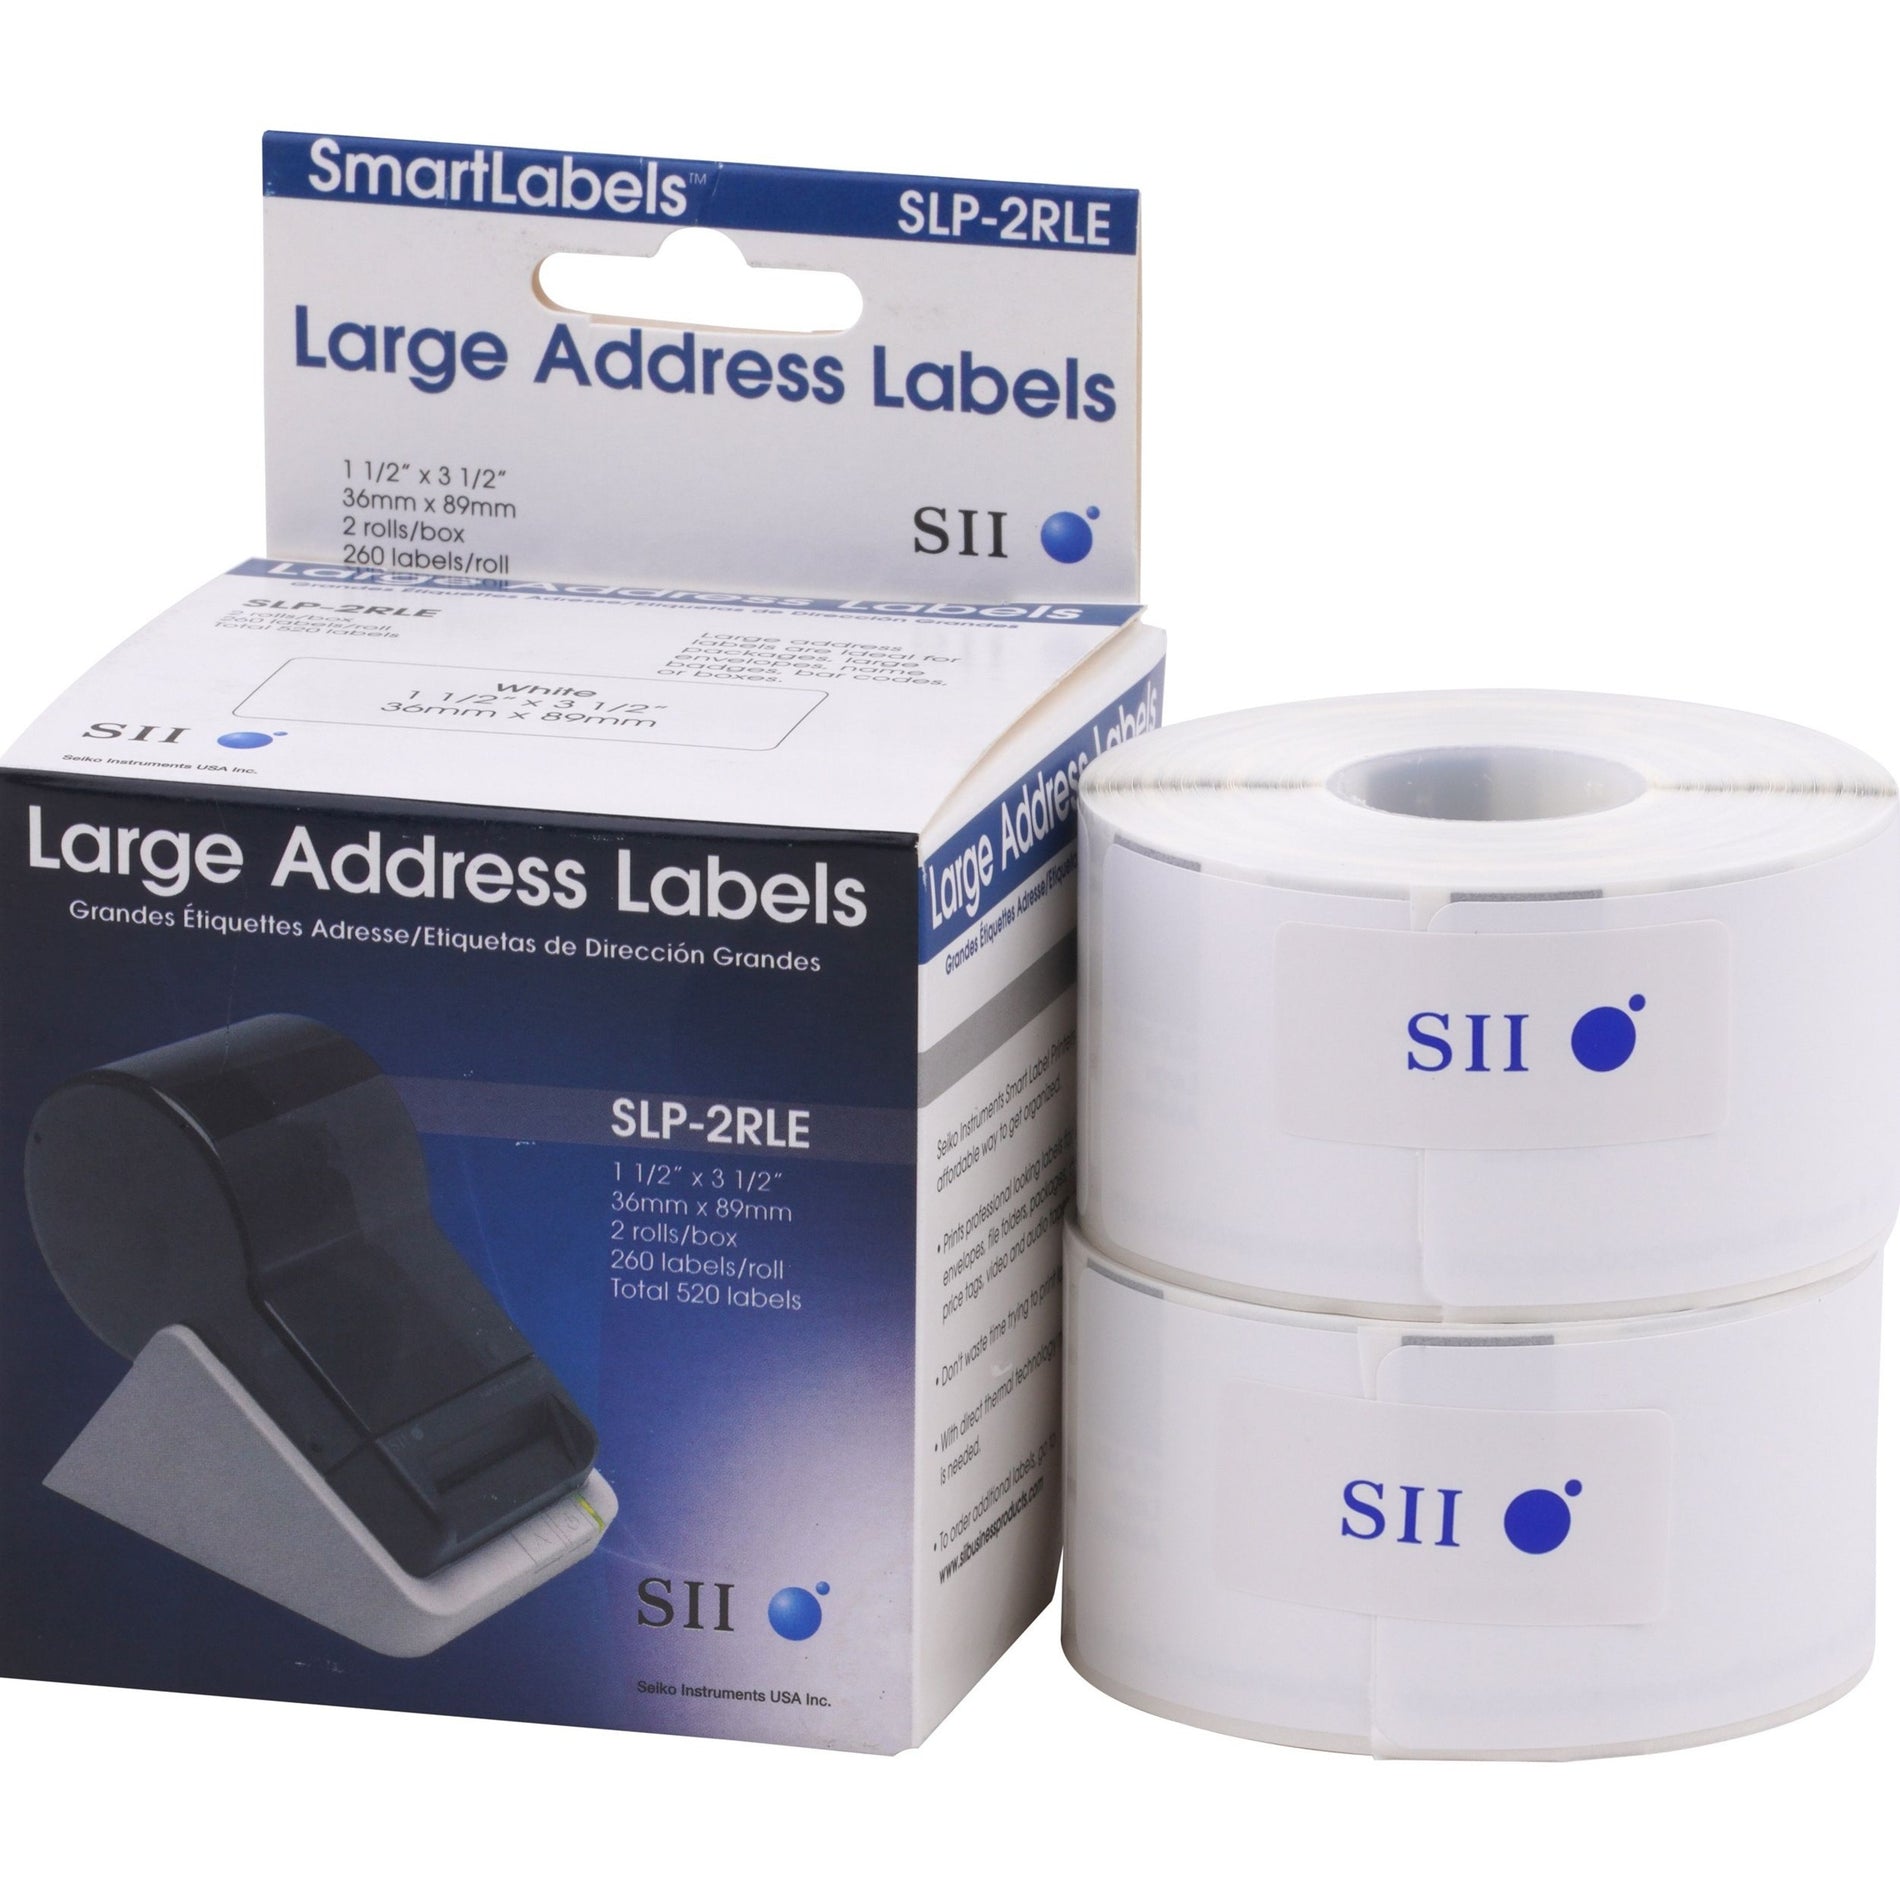 Seiko SLP-2RLE SmartLabel Printer Large Address Labels, 1-1/2"x3-1/2", 260 Labels per Roll